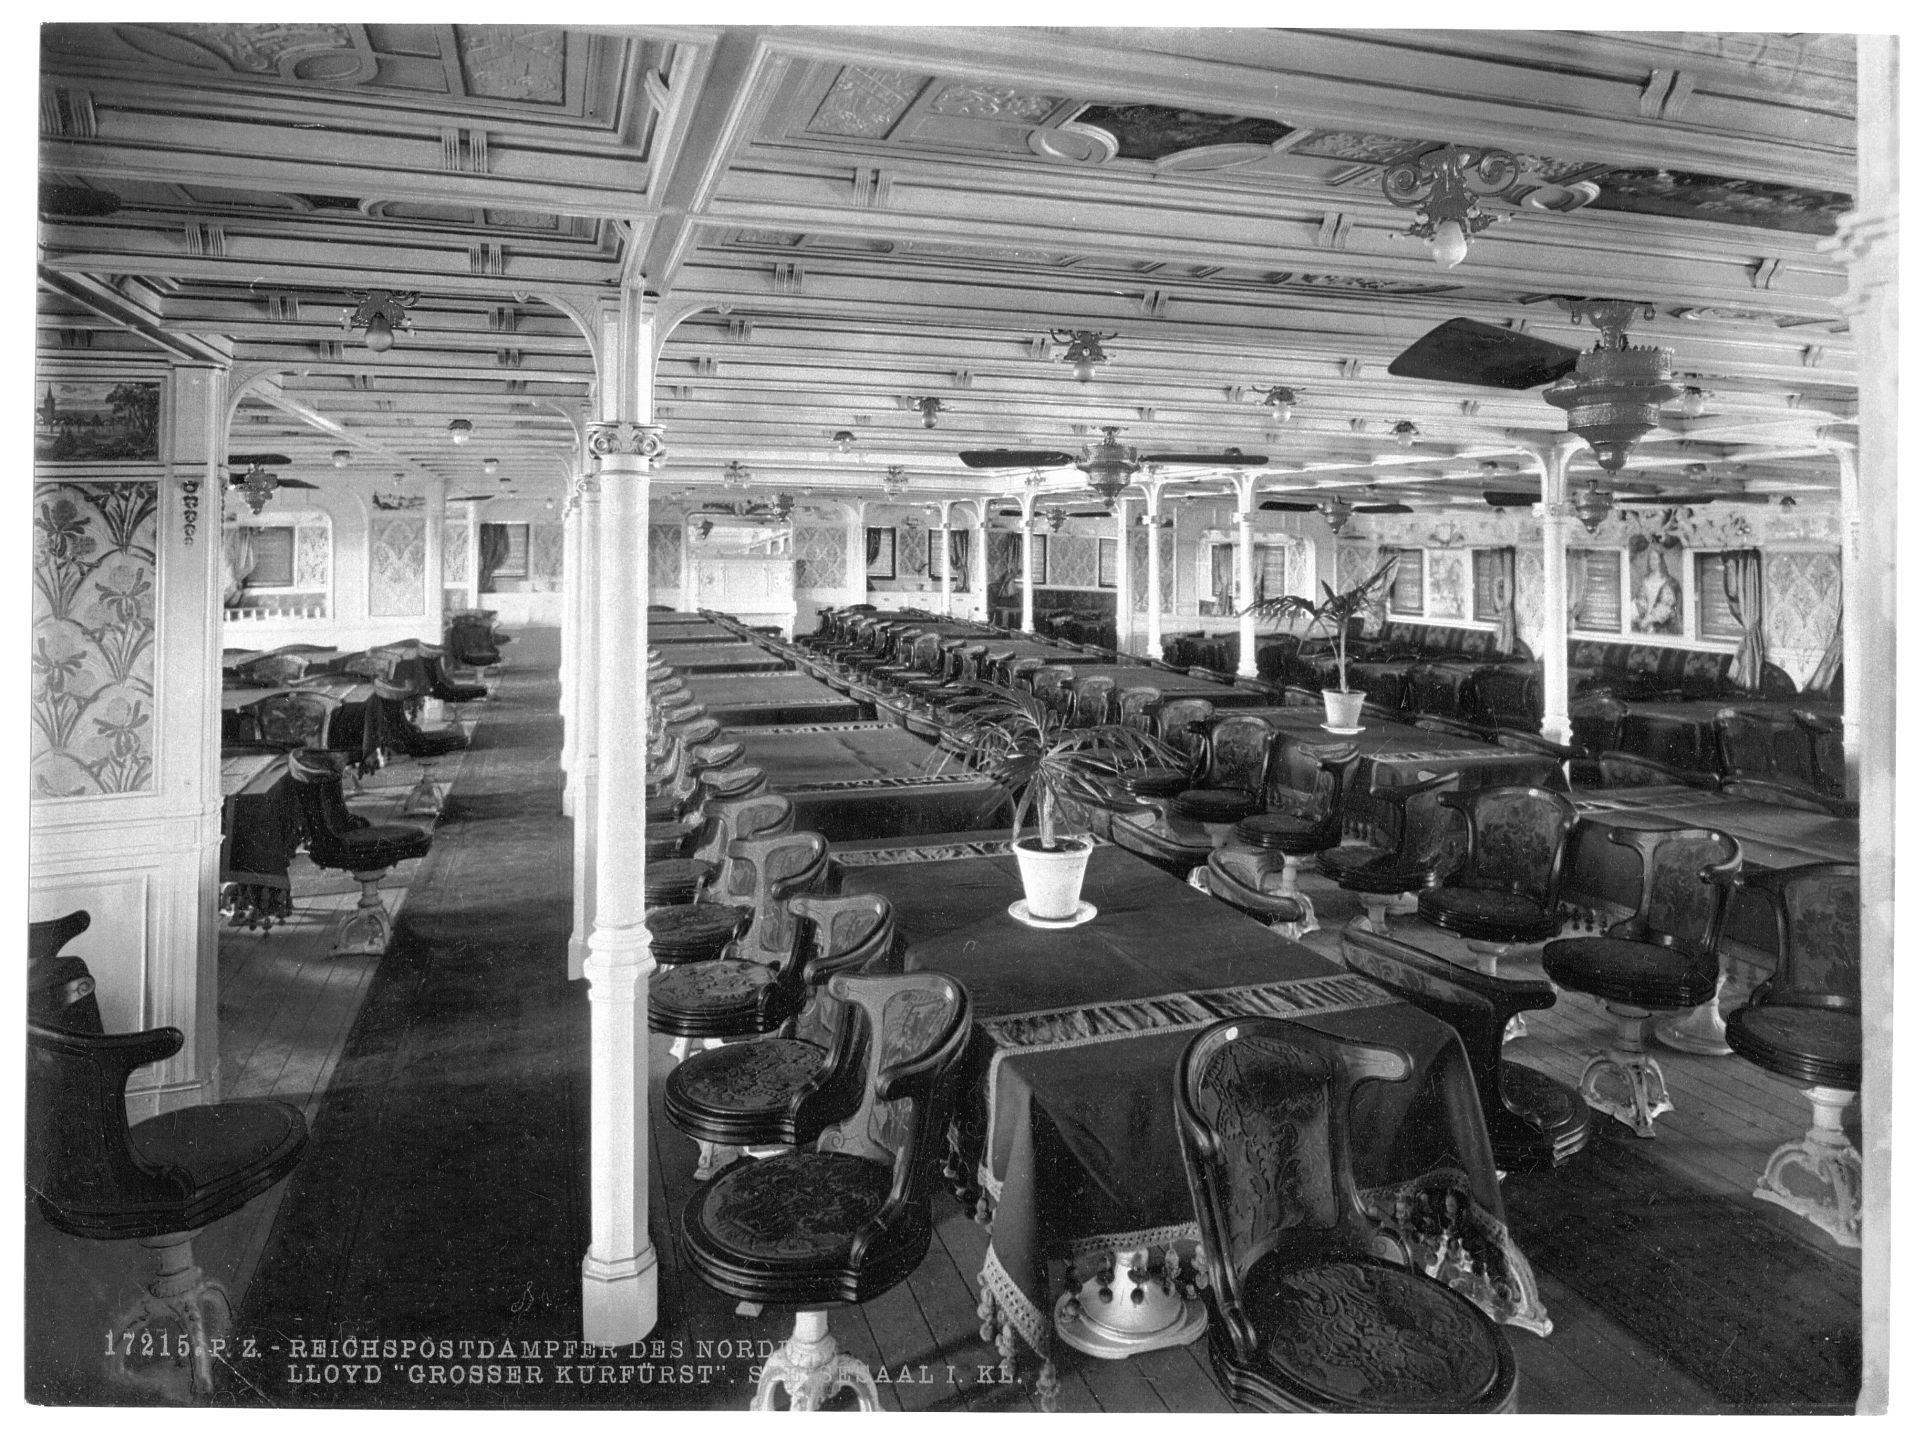 "Grosser Kurfurst," dining room, first class, North German Lloyd, Royal Mail Steamers